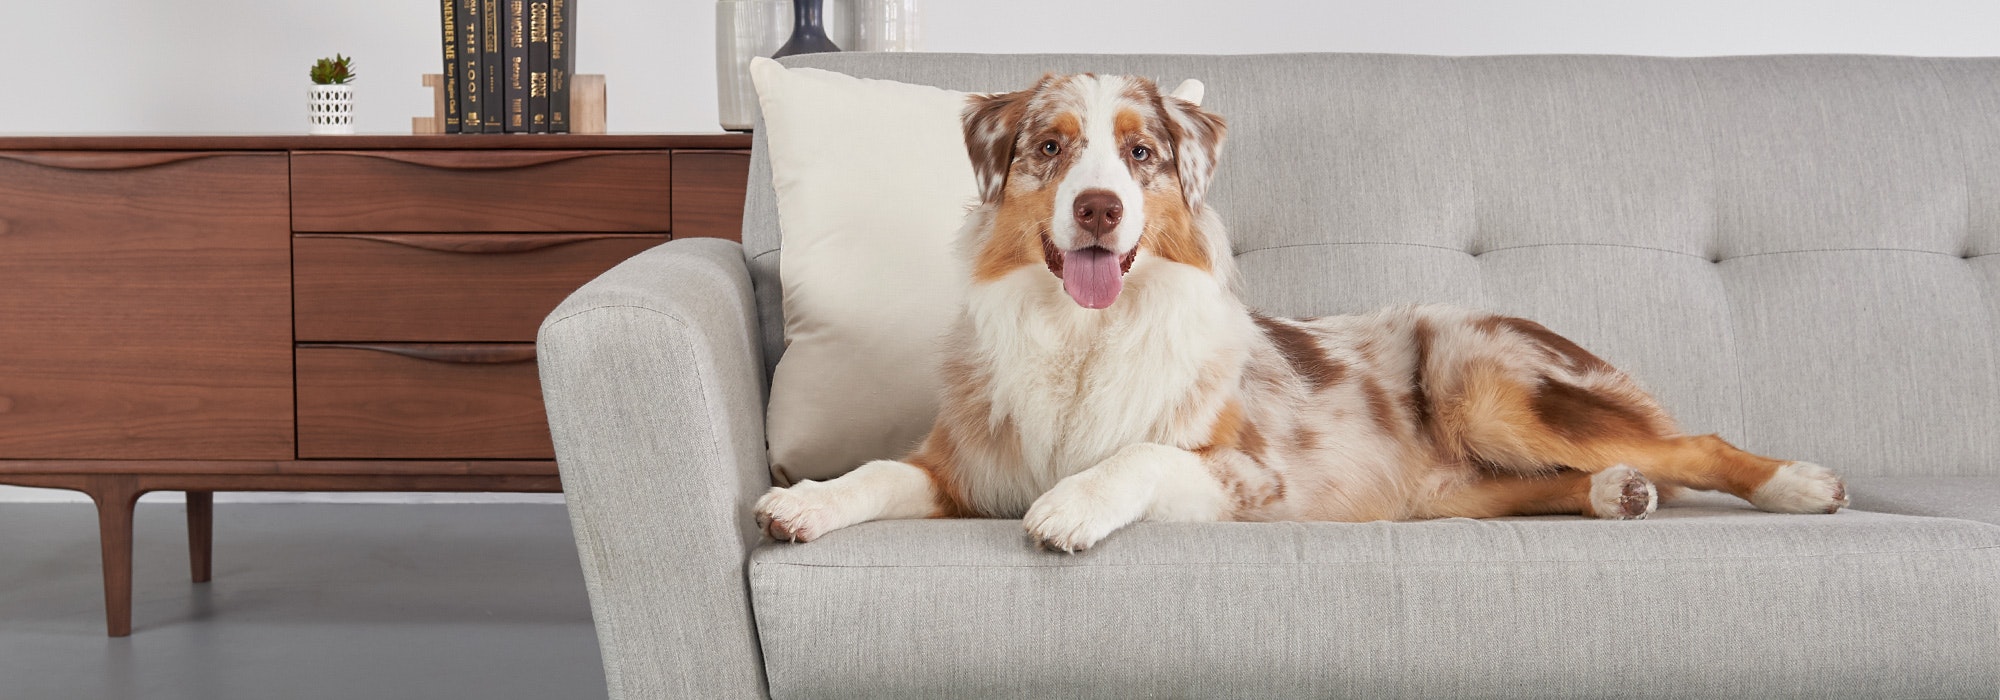 dog friendly living room furniture